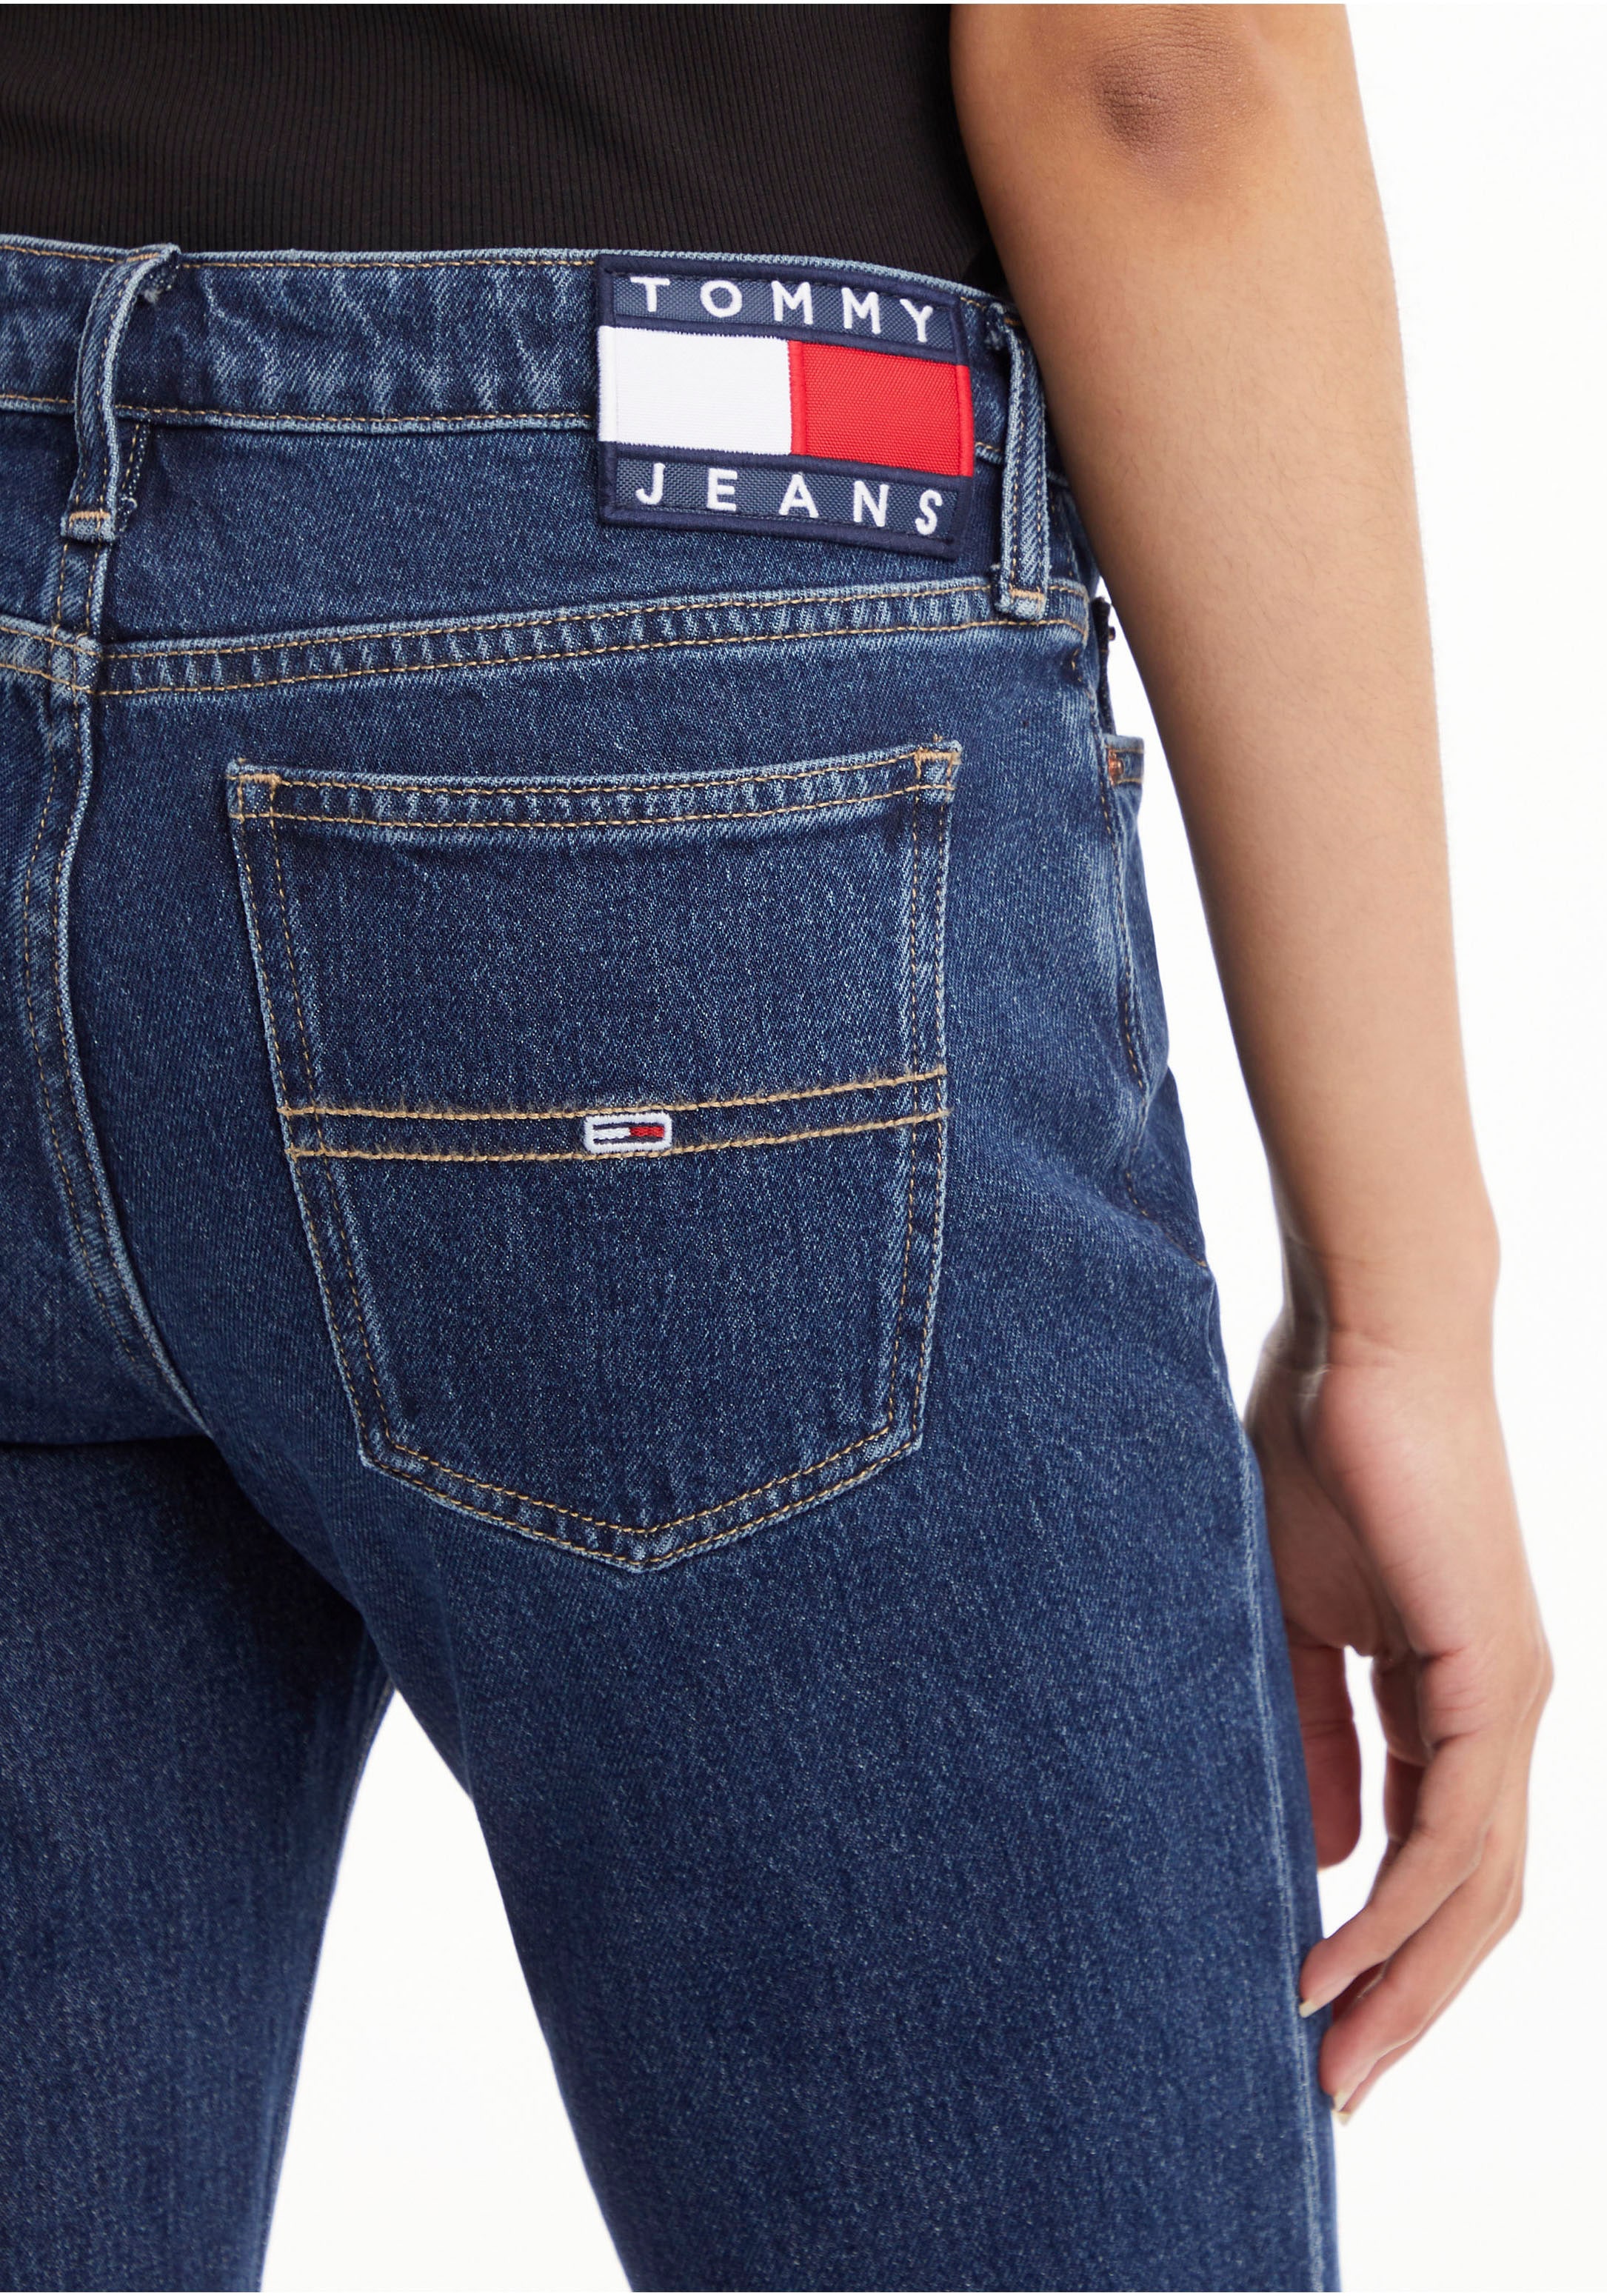 Tommy Jeans Jeans Tommy Schlagjeans, Bund Logo-Badge mit am OTTOversand bei